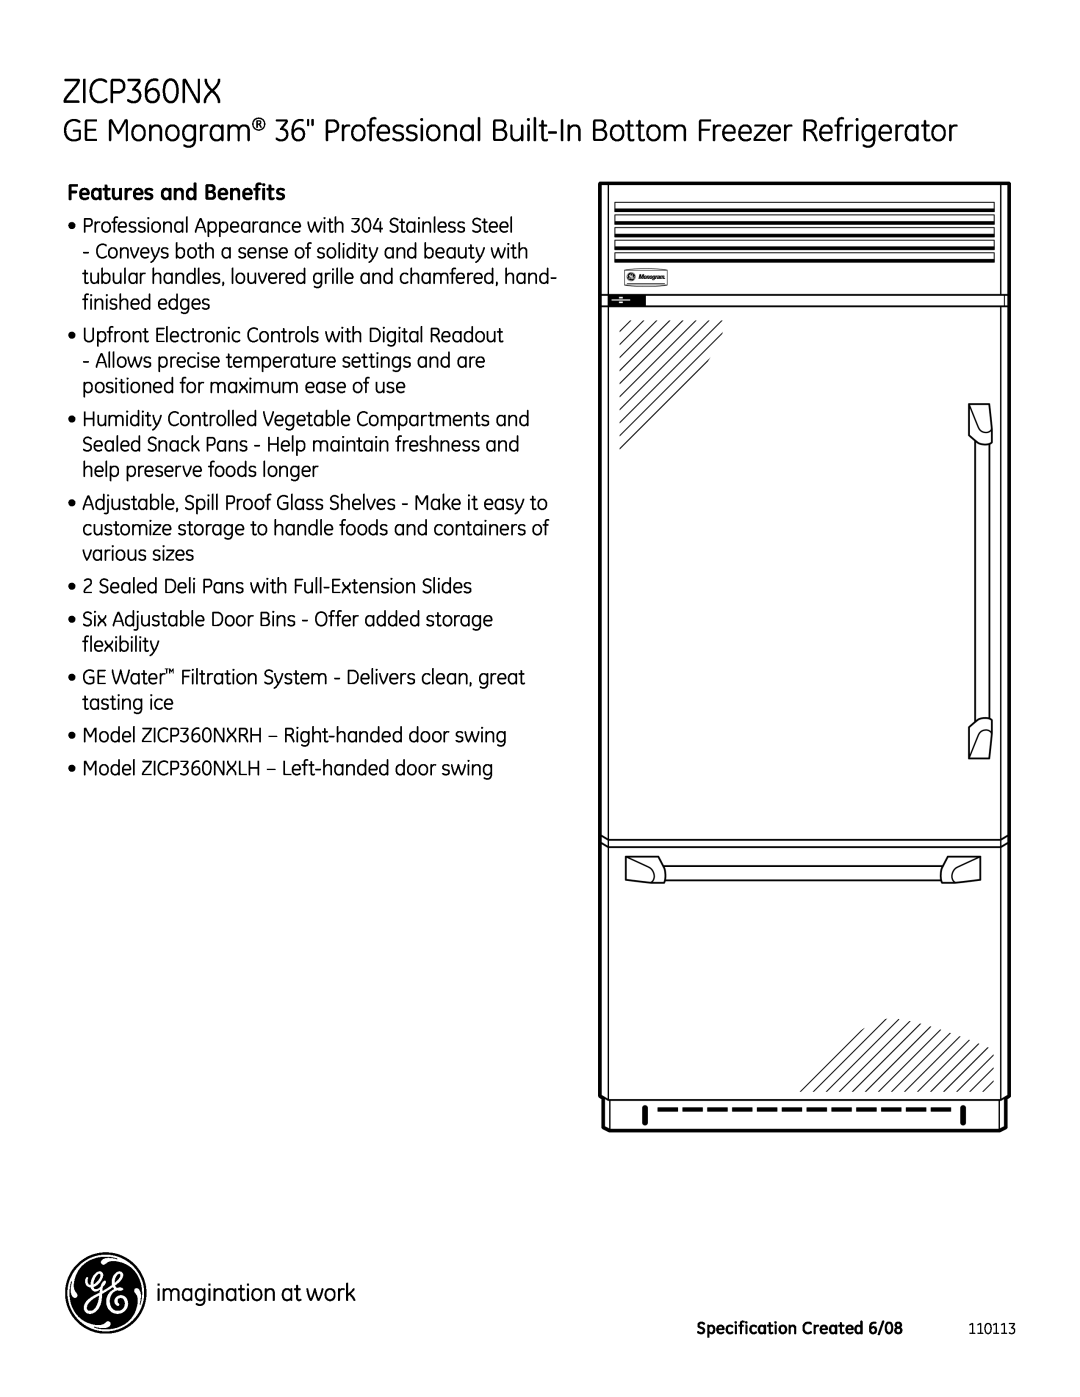 GE Monogram ZICP360NX dimensions Features and Benefits, GE Monogram 36 Professional Built-In Bottom Freezer Refrigerator 